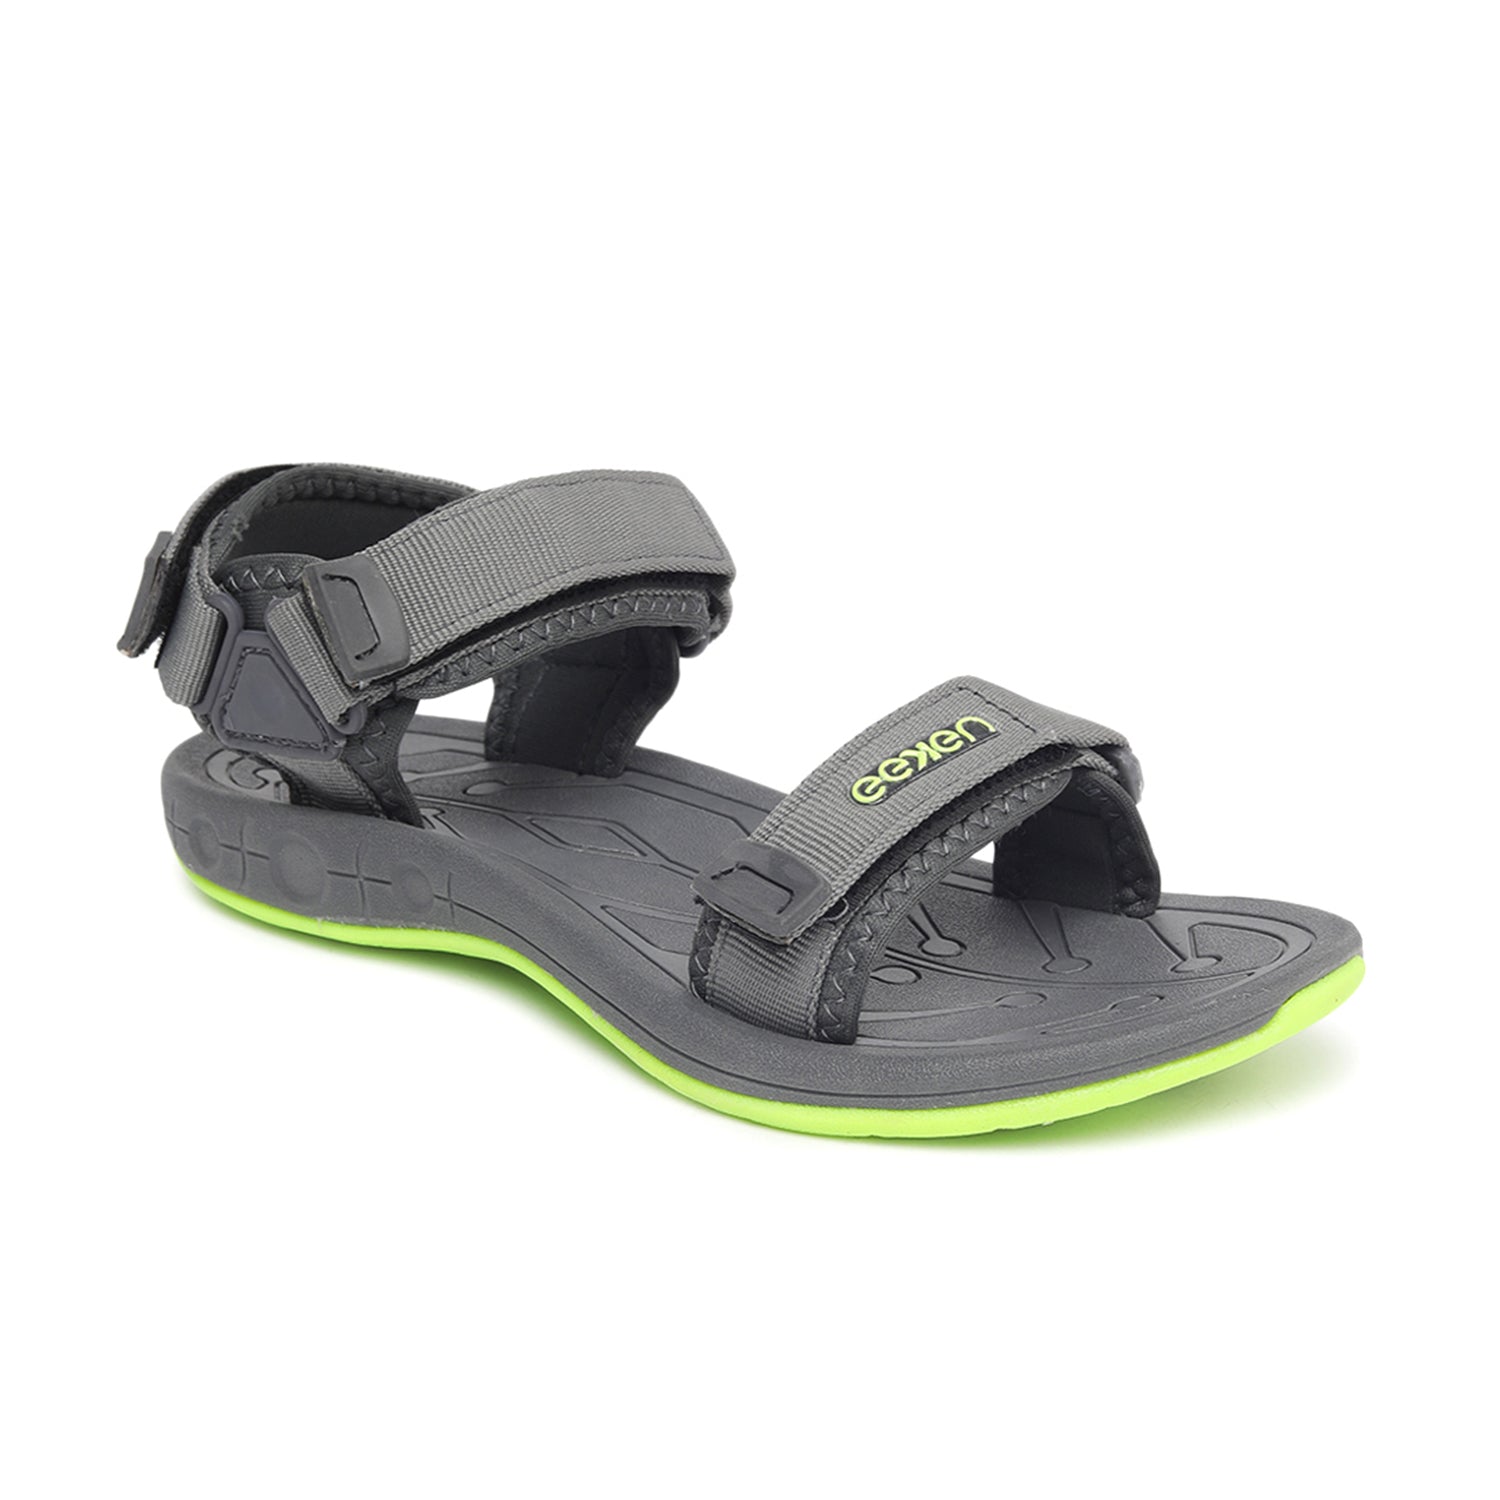 Eeken Stylish Grey And Fluorescent Green Casual Outdoor Sandals For Men